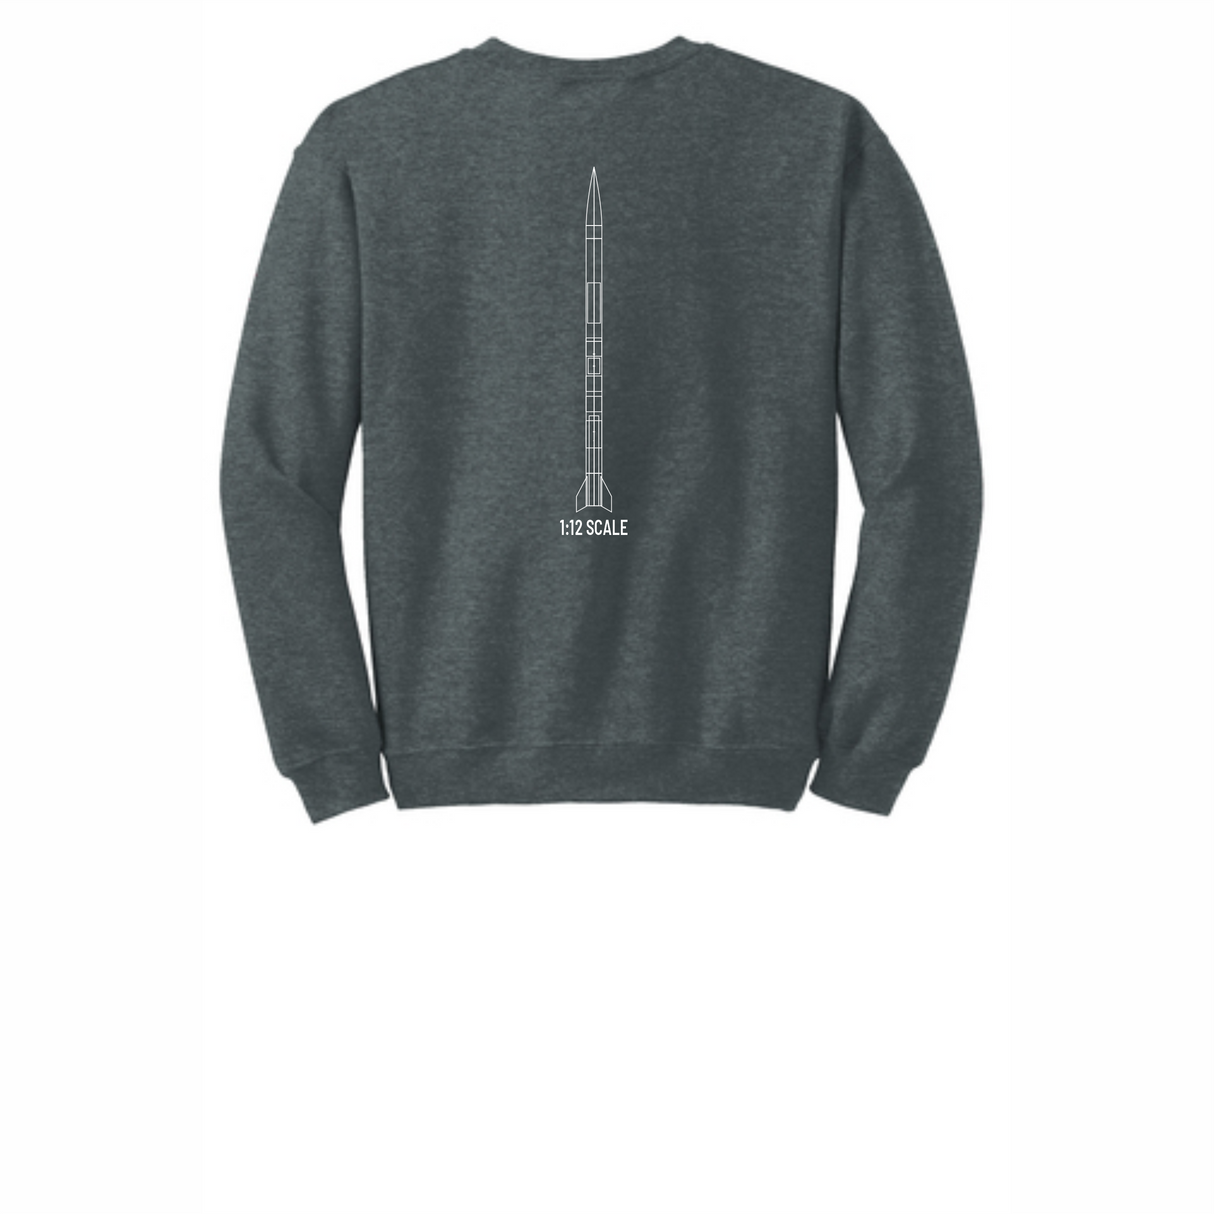 Atomic Aggies Crewneck Sweatshirt